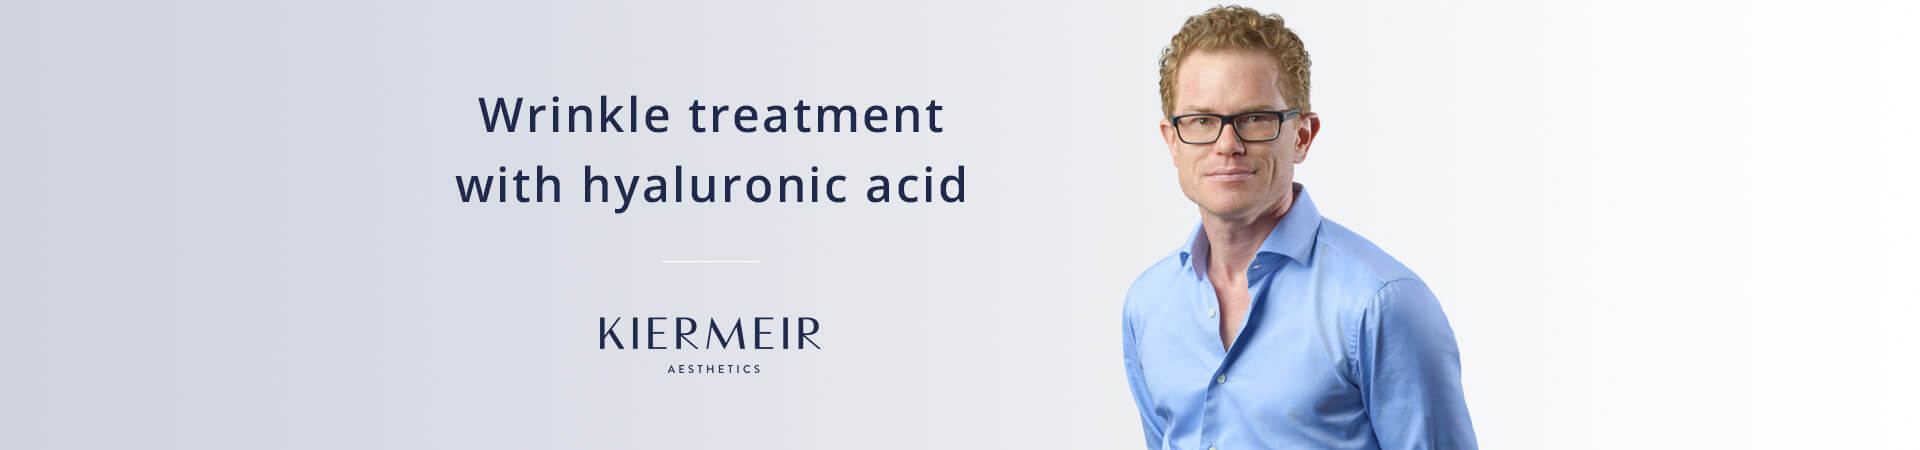 Wrinkle Treatment with Hyaluronic Acid in Bern by Dr. Kiermeir 